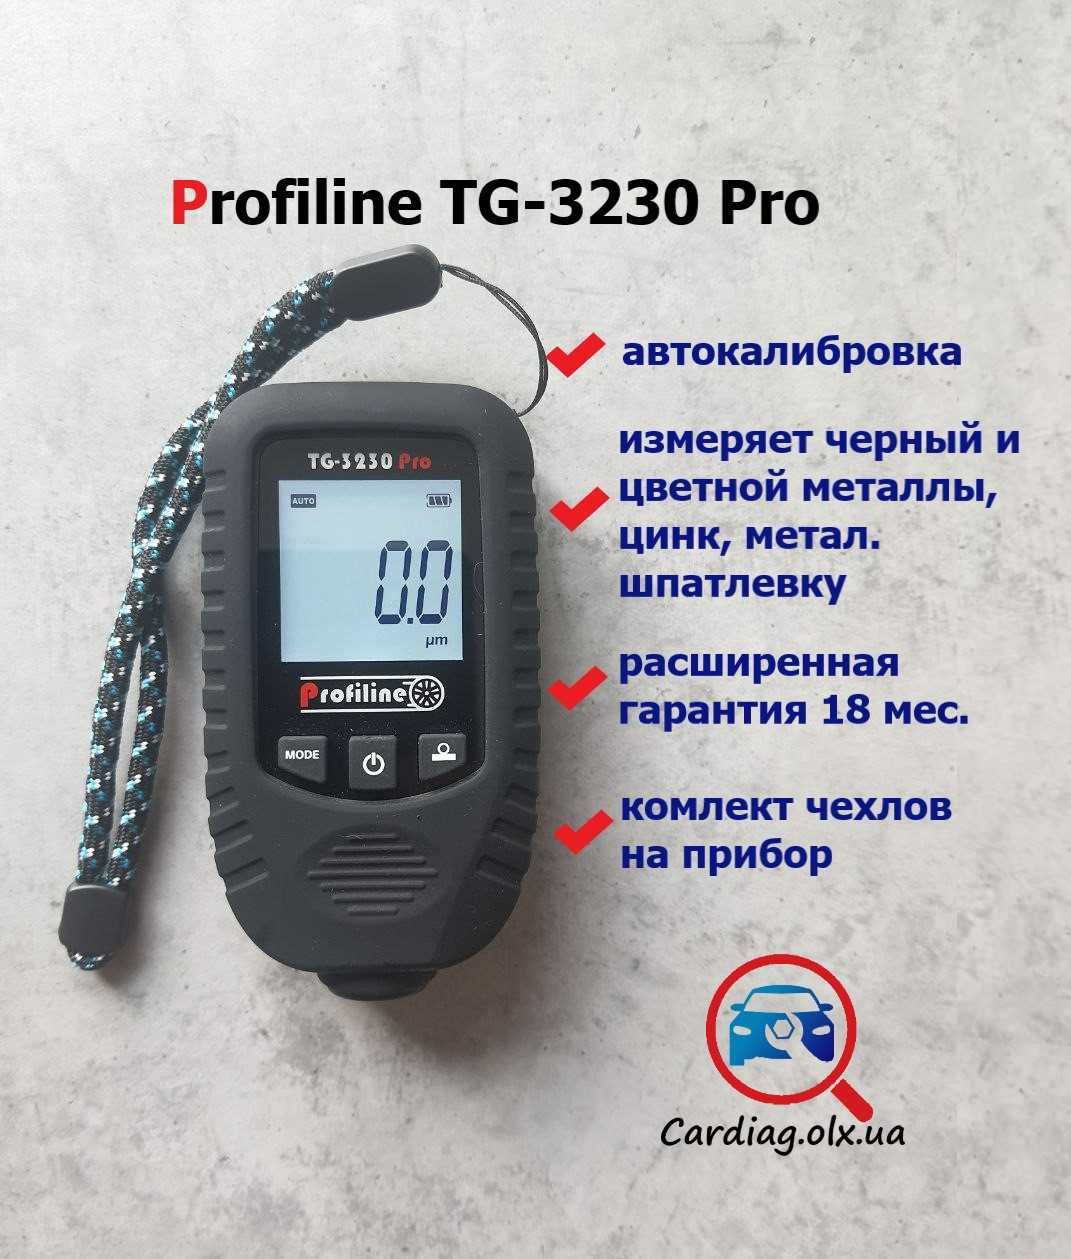 Новинка! Толщиномер Profiline TG-3230 Pro. Гарантия 18 мес. Fe/ZN/nFe.